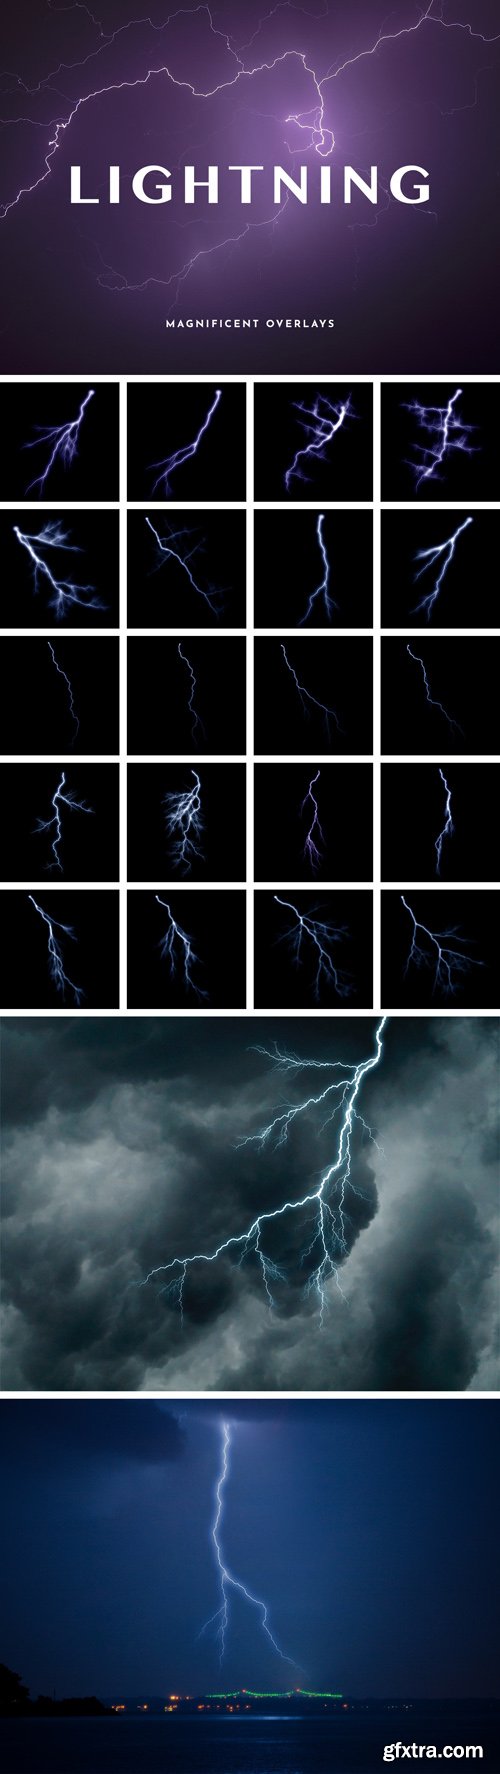 75 Magnificent Overlays Lightning